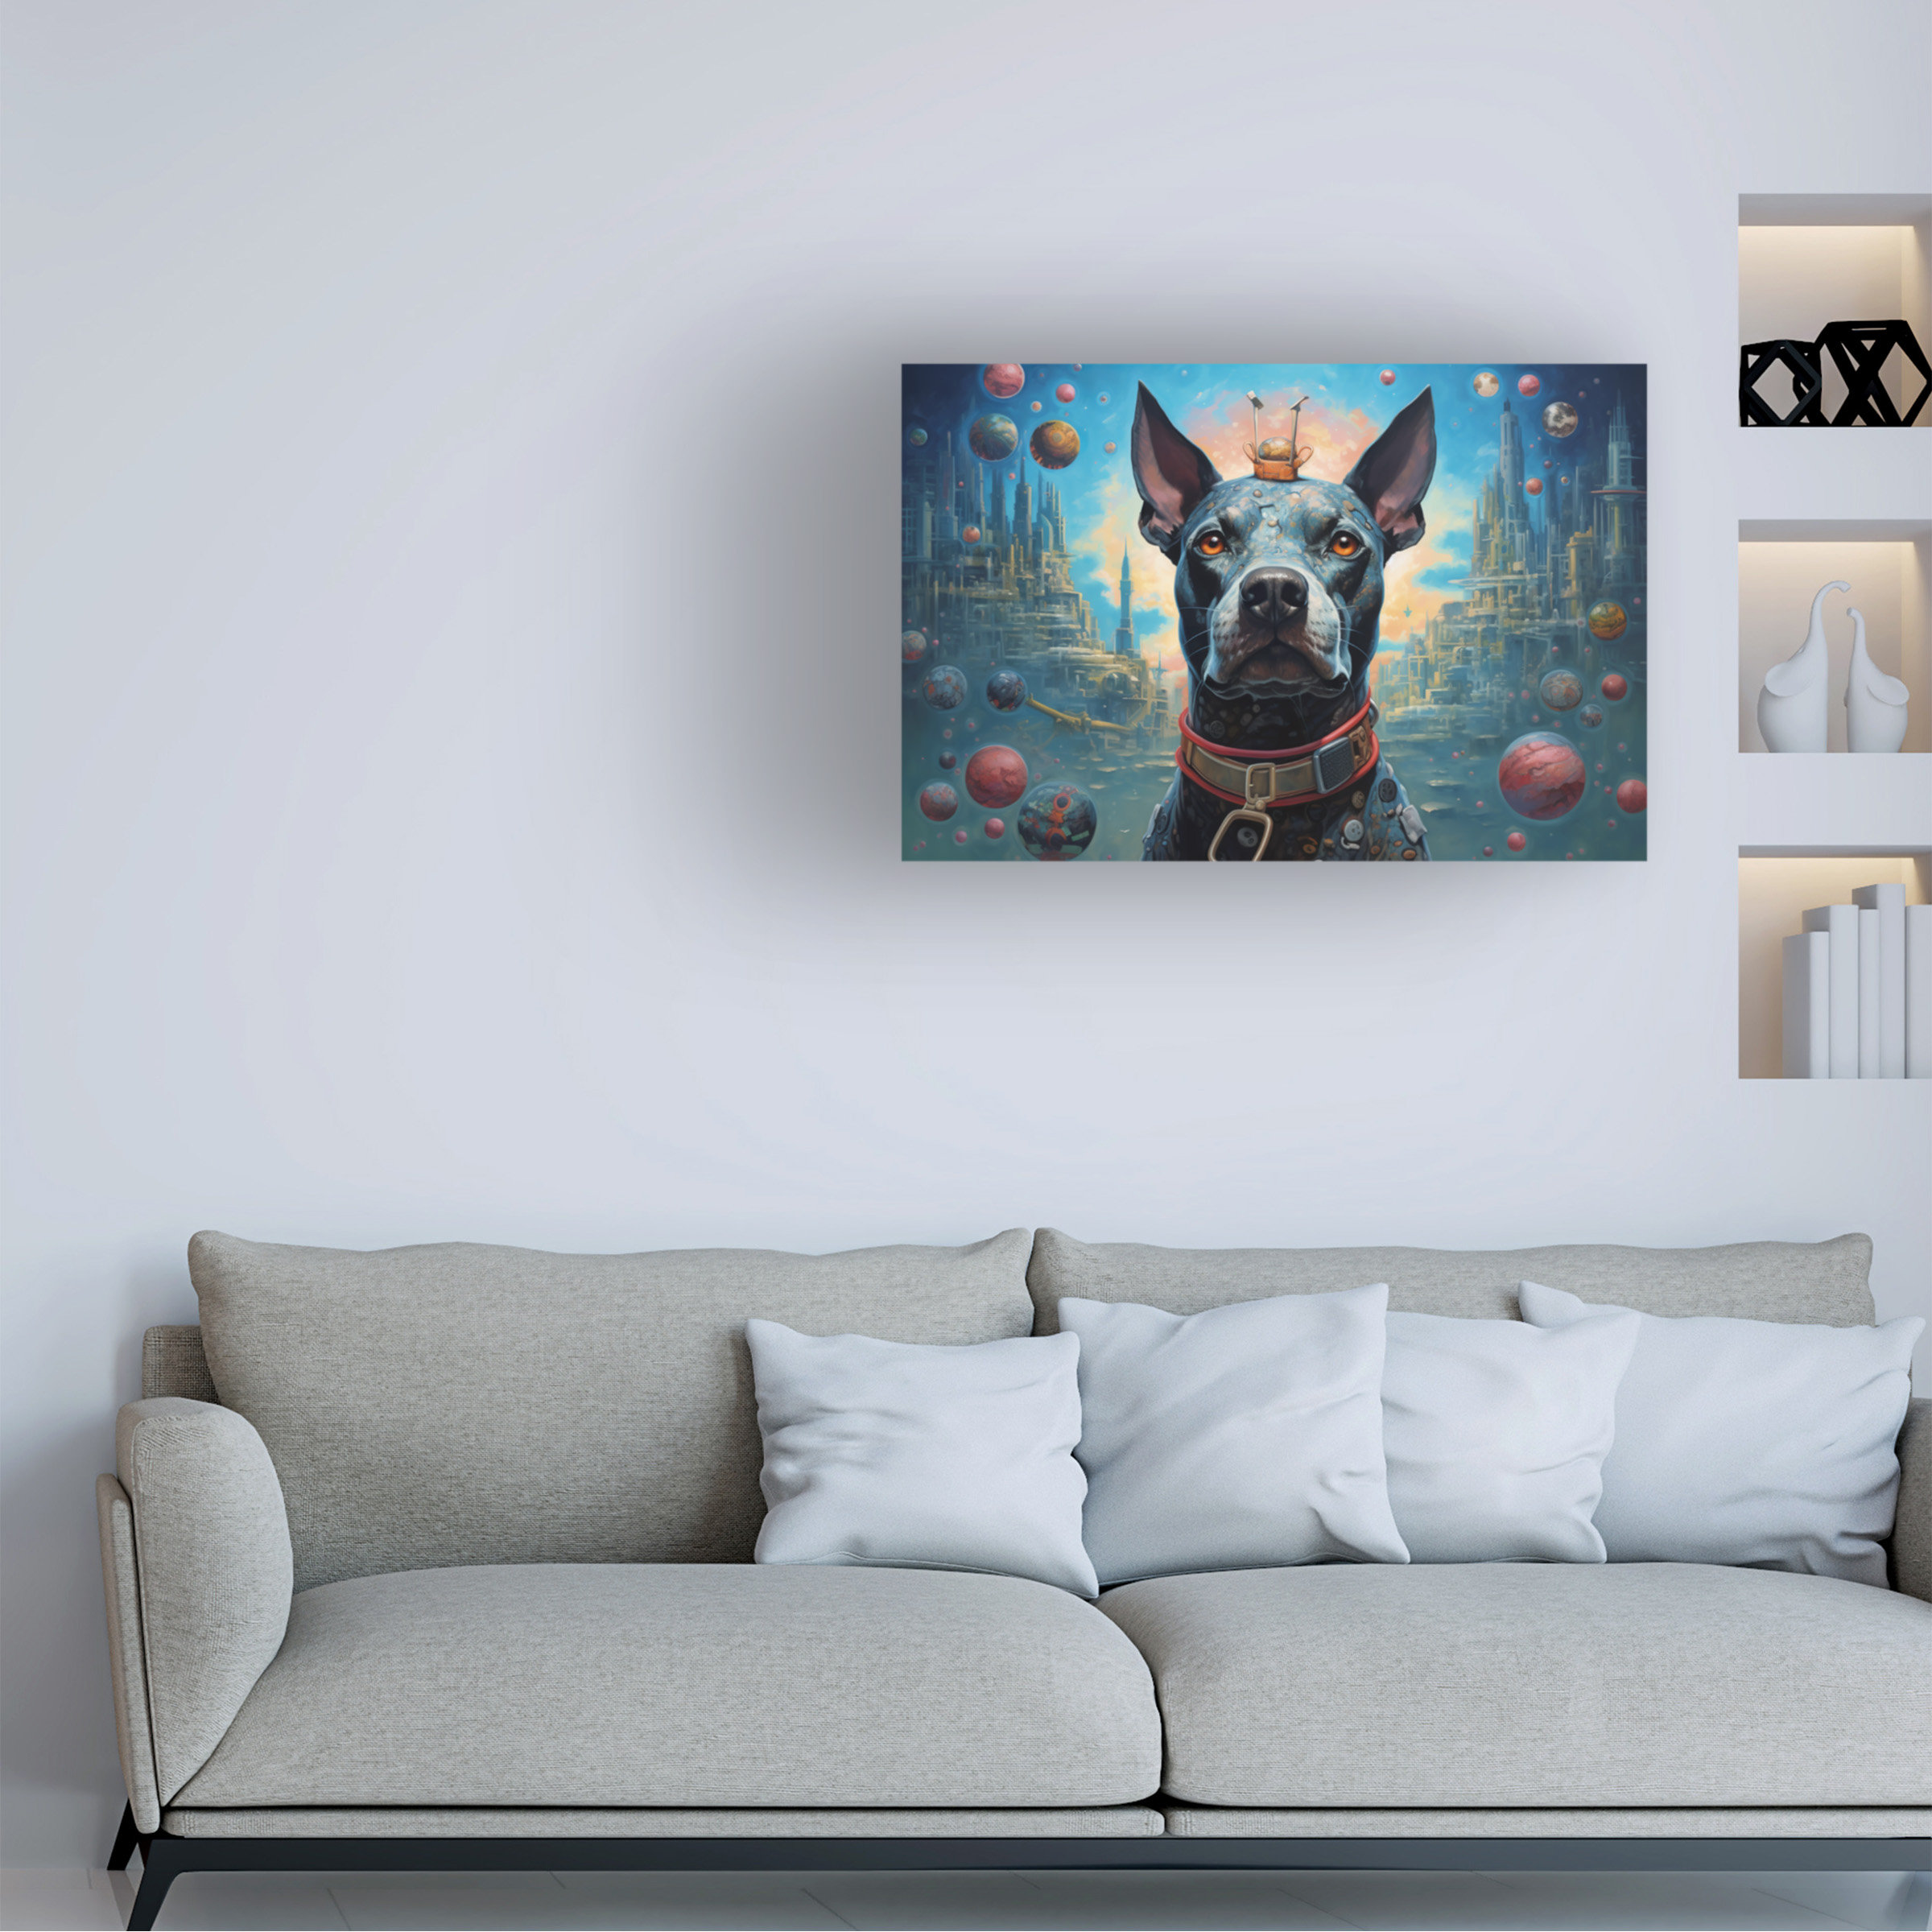 Dog Themed Room Decor, Dog Wallpaper